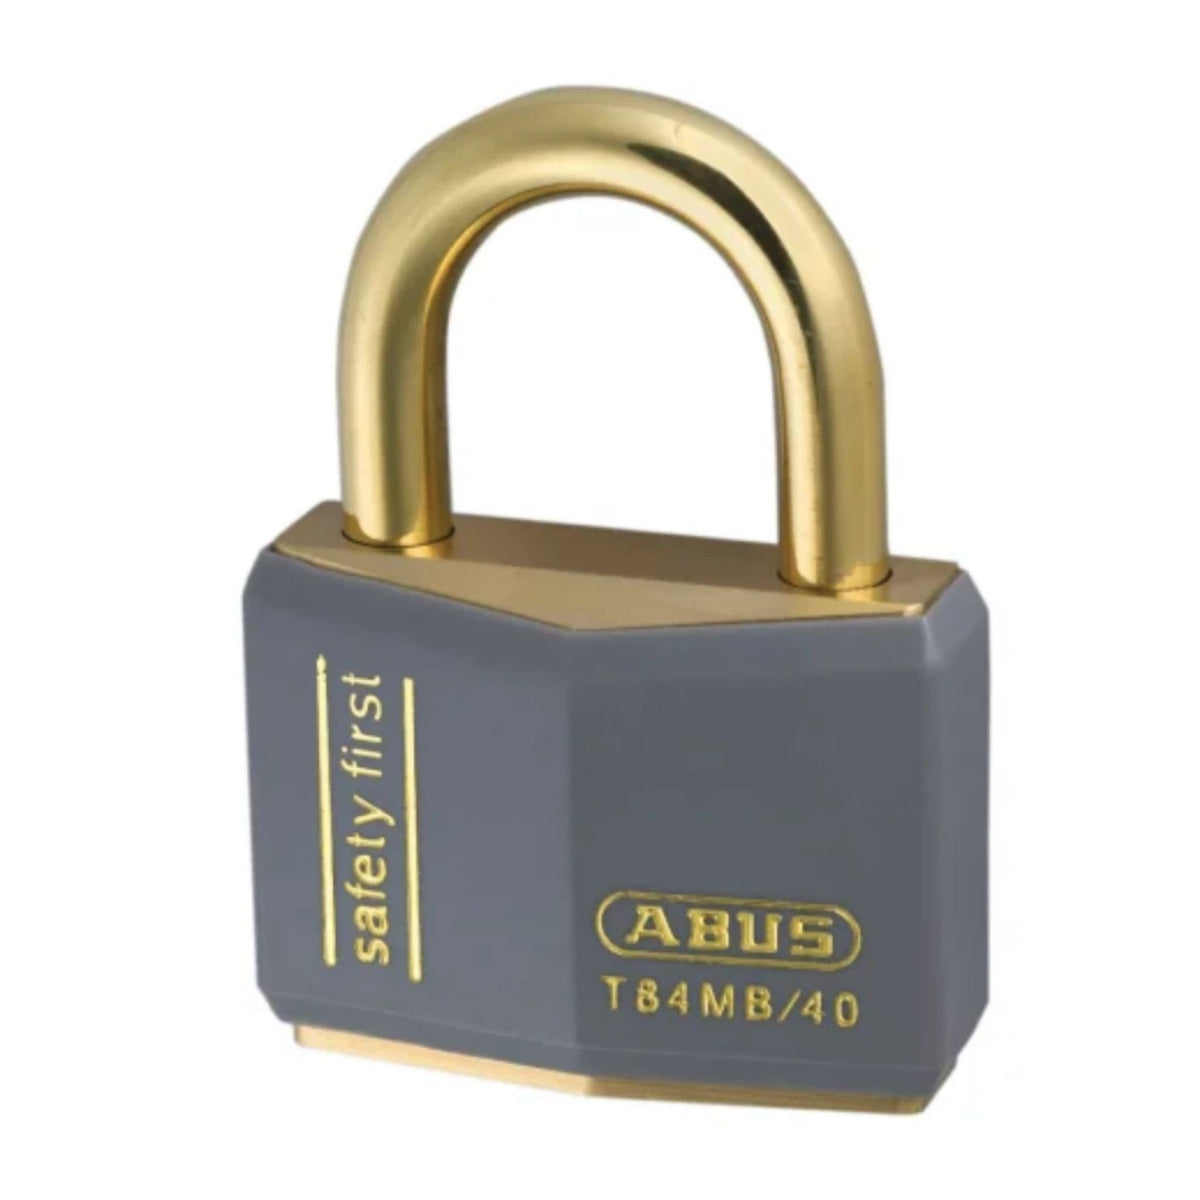 Abus T84MB/40 B KD Grey Weatherproof Brass Padlock - The Lock Source